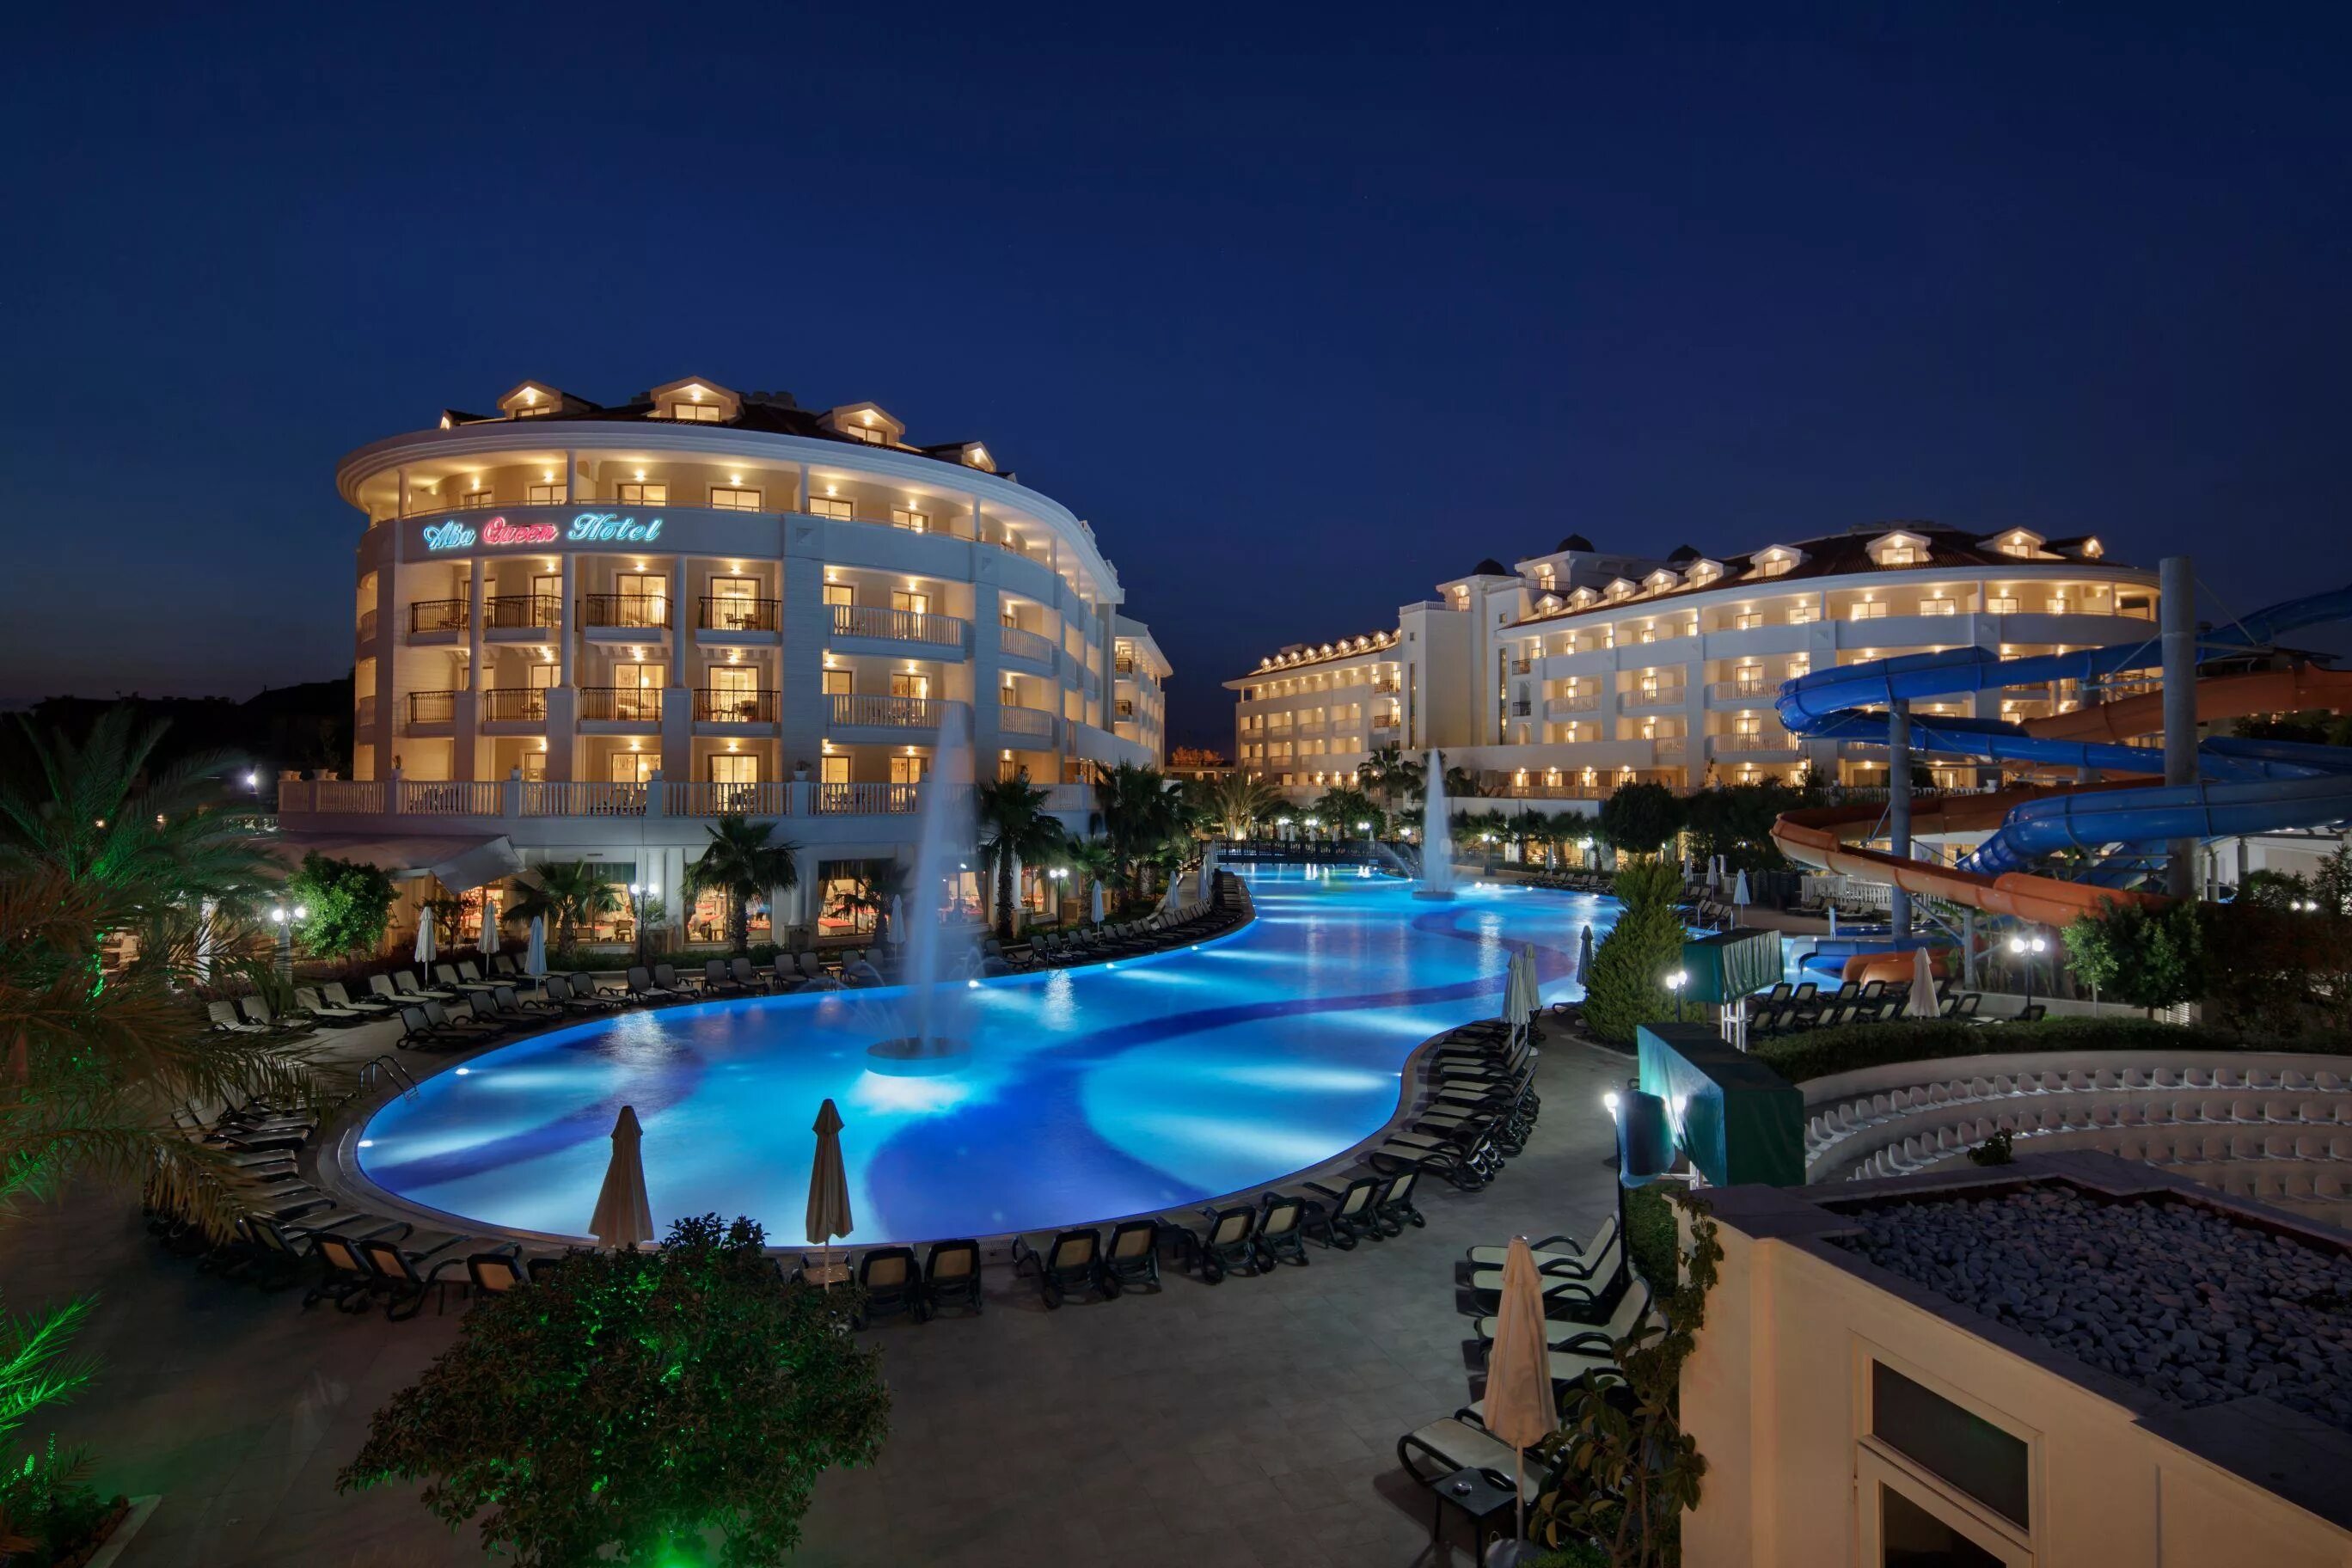 Alba Queen Hotel 5 Турция. Отель Алба Квин в Сиде Турция. Side resort hotel 5 турция